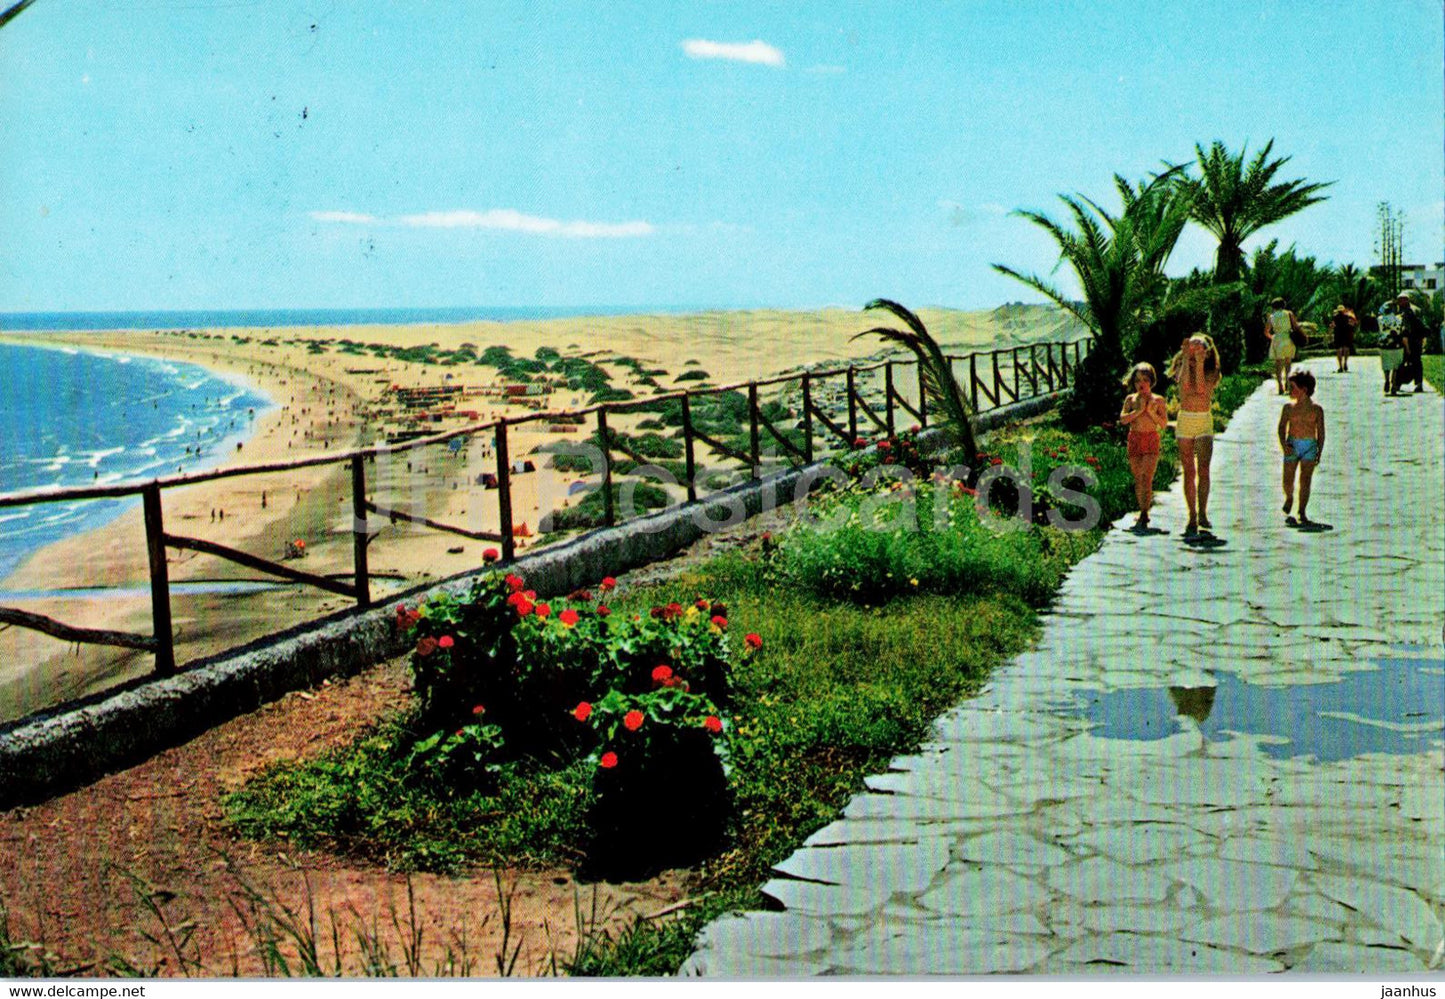 Gran Canaria - Playa del Ingles - The Englishman beach - 5003 - 1974 - Spain - used - JH Postcards